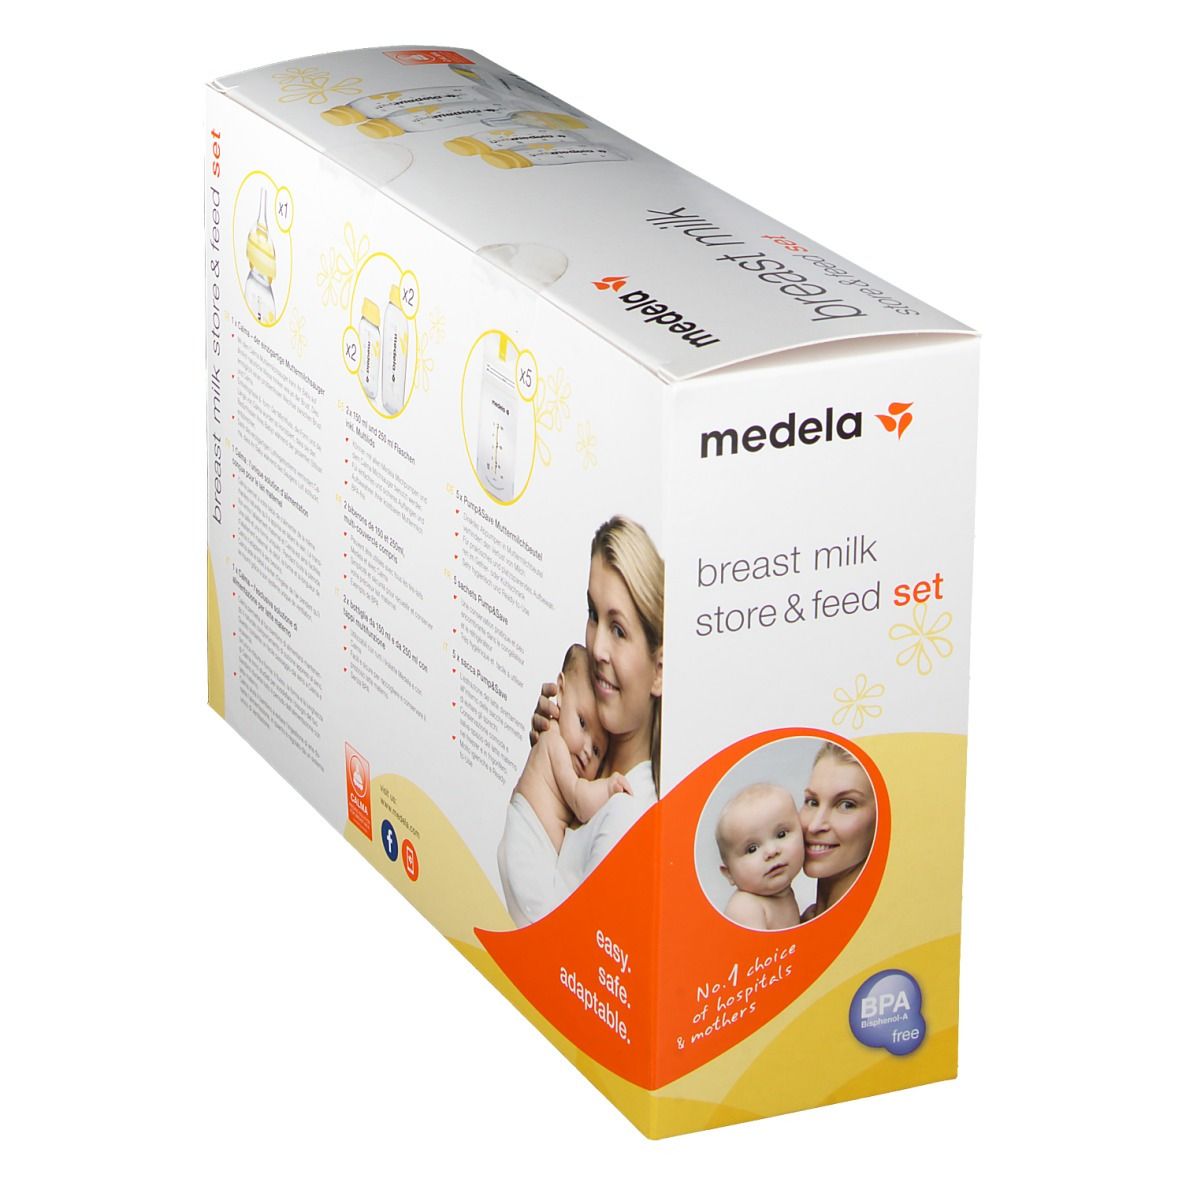 Medela Breast Milk Store & Feed Set